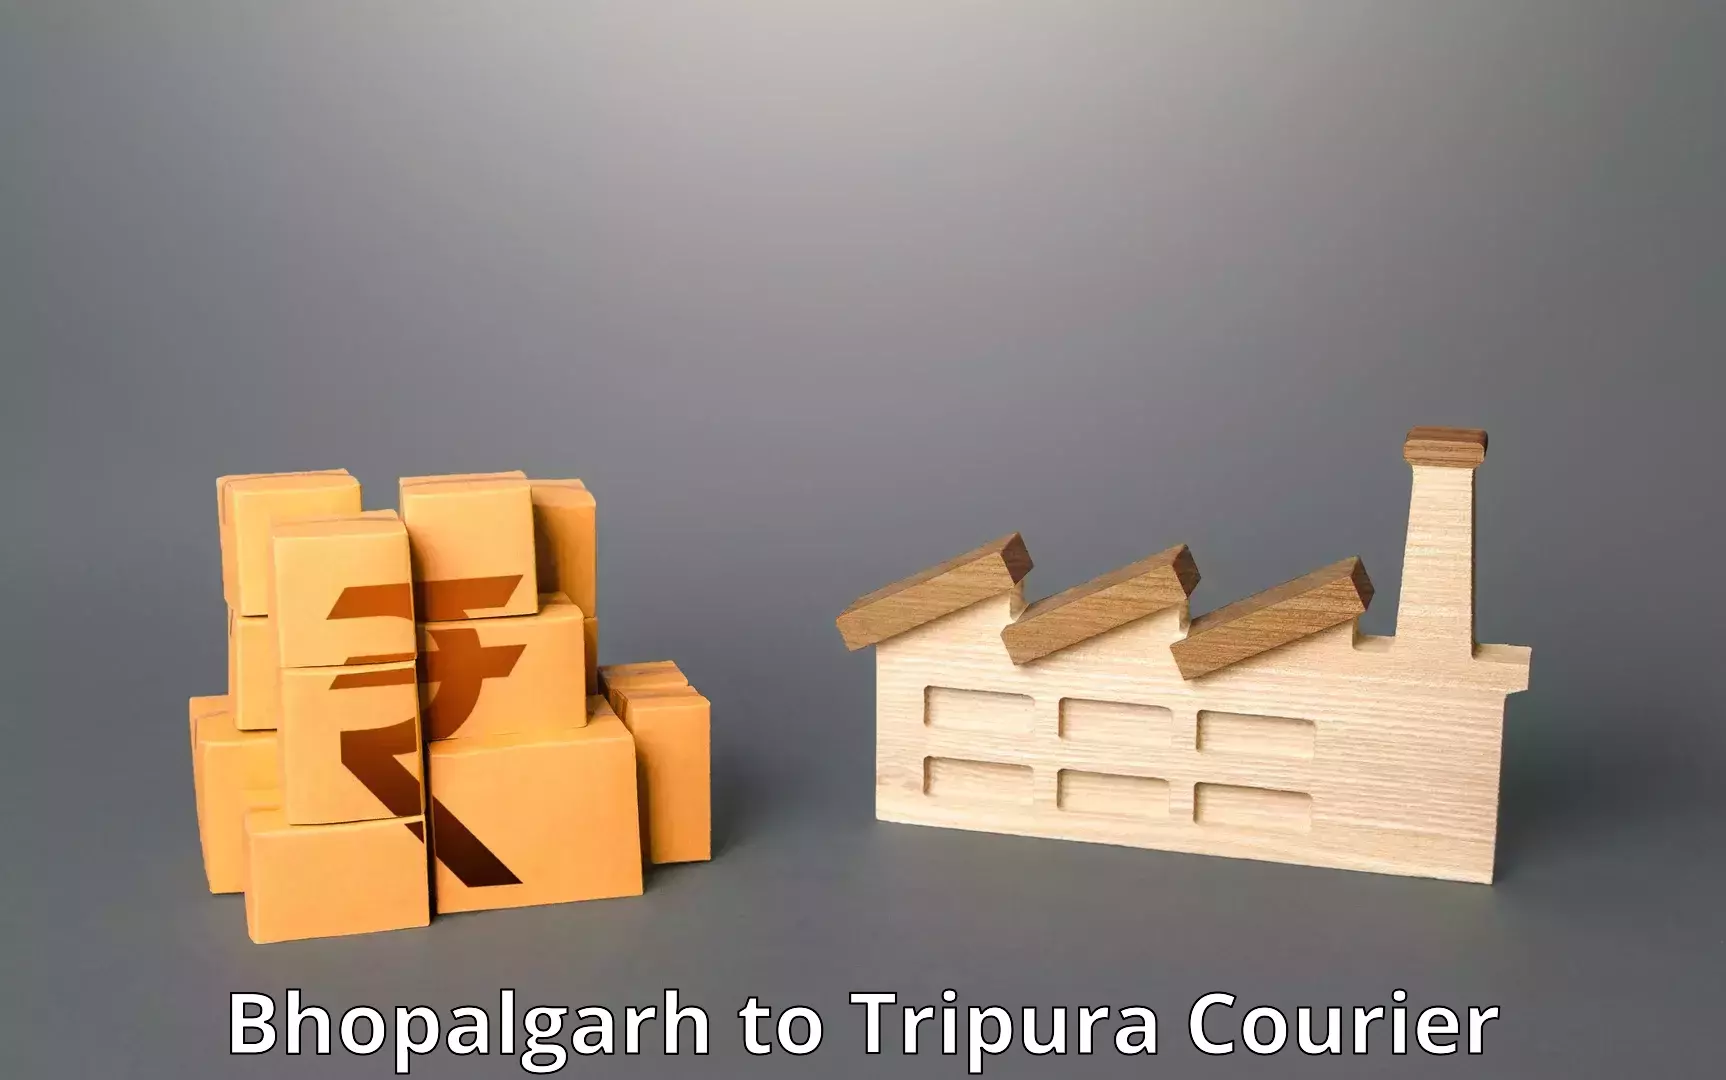 E-commerce shipping partnerships Bhopalgarh to Udaipur Tripura